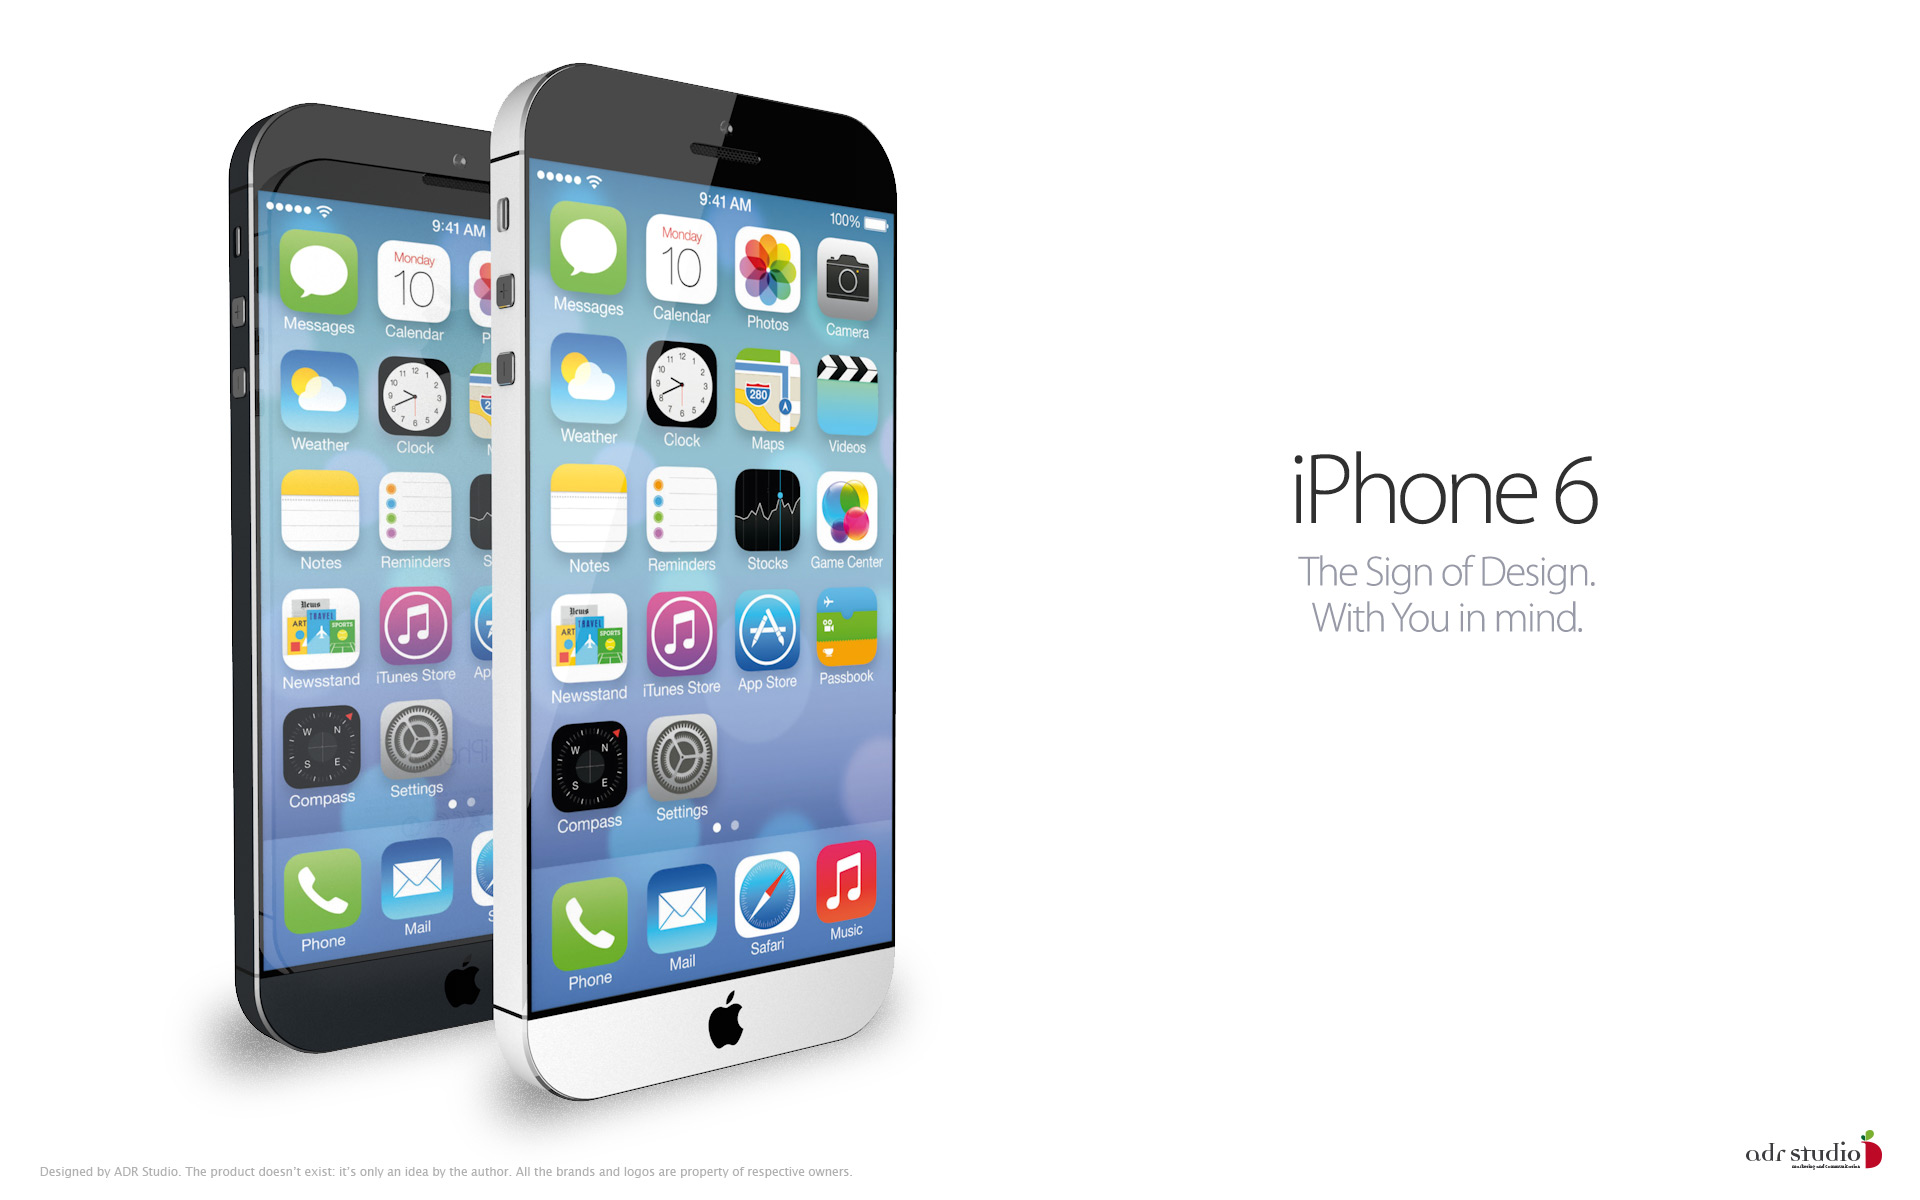 iPhone 6 mit iOS 7 - The Sign of Design! 9